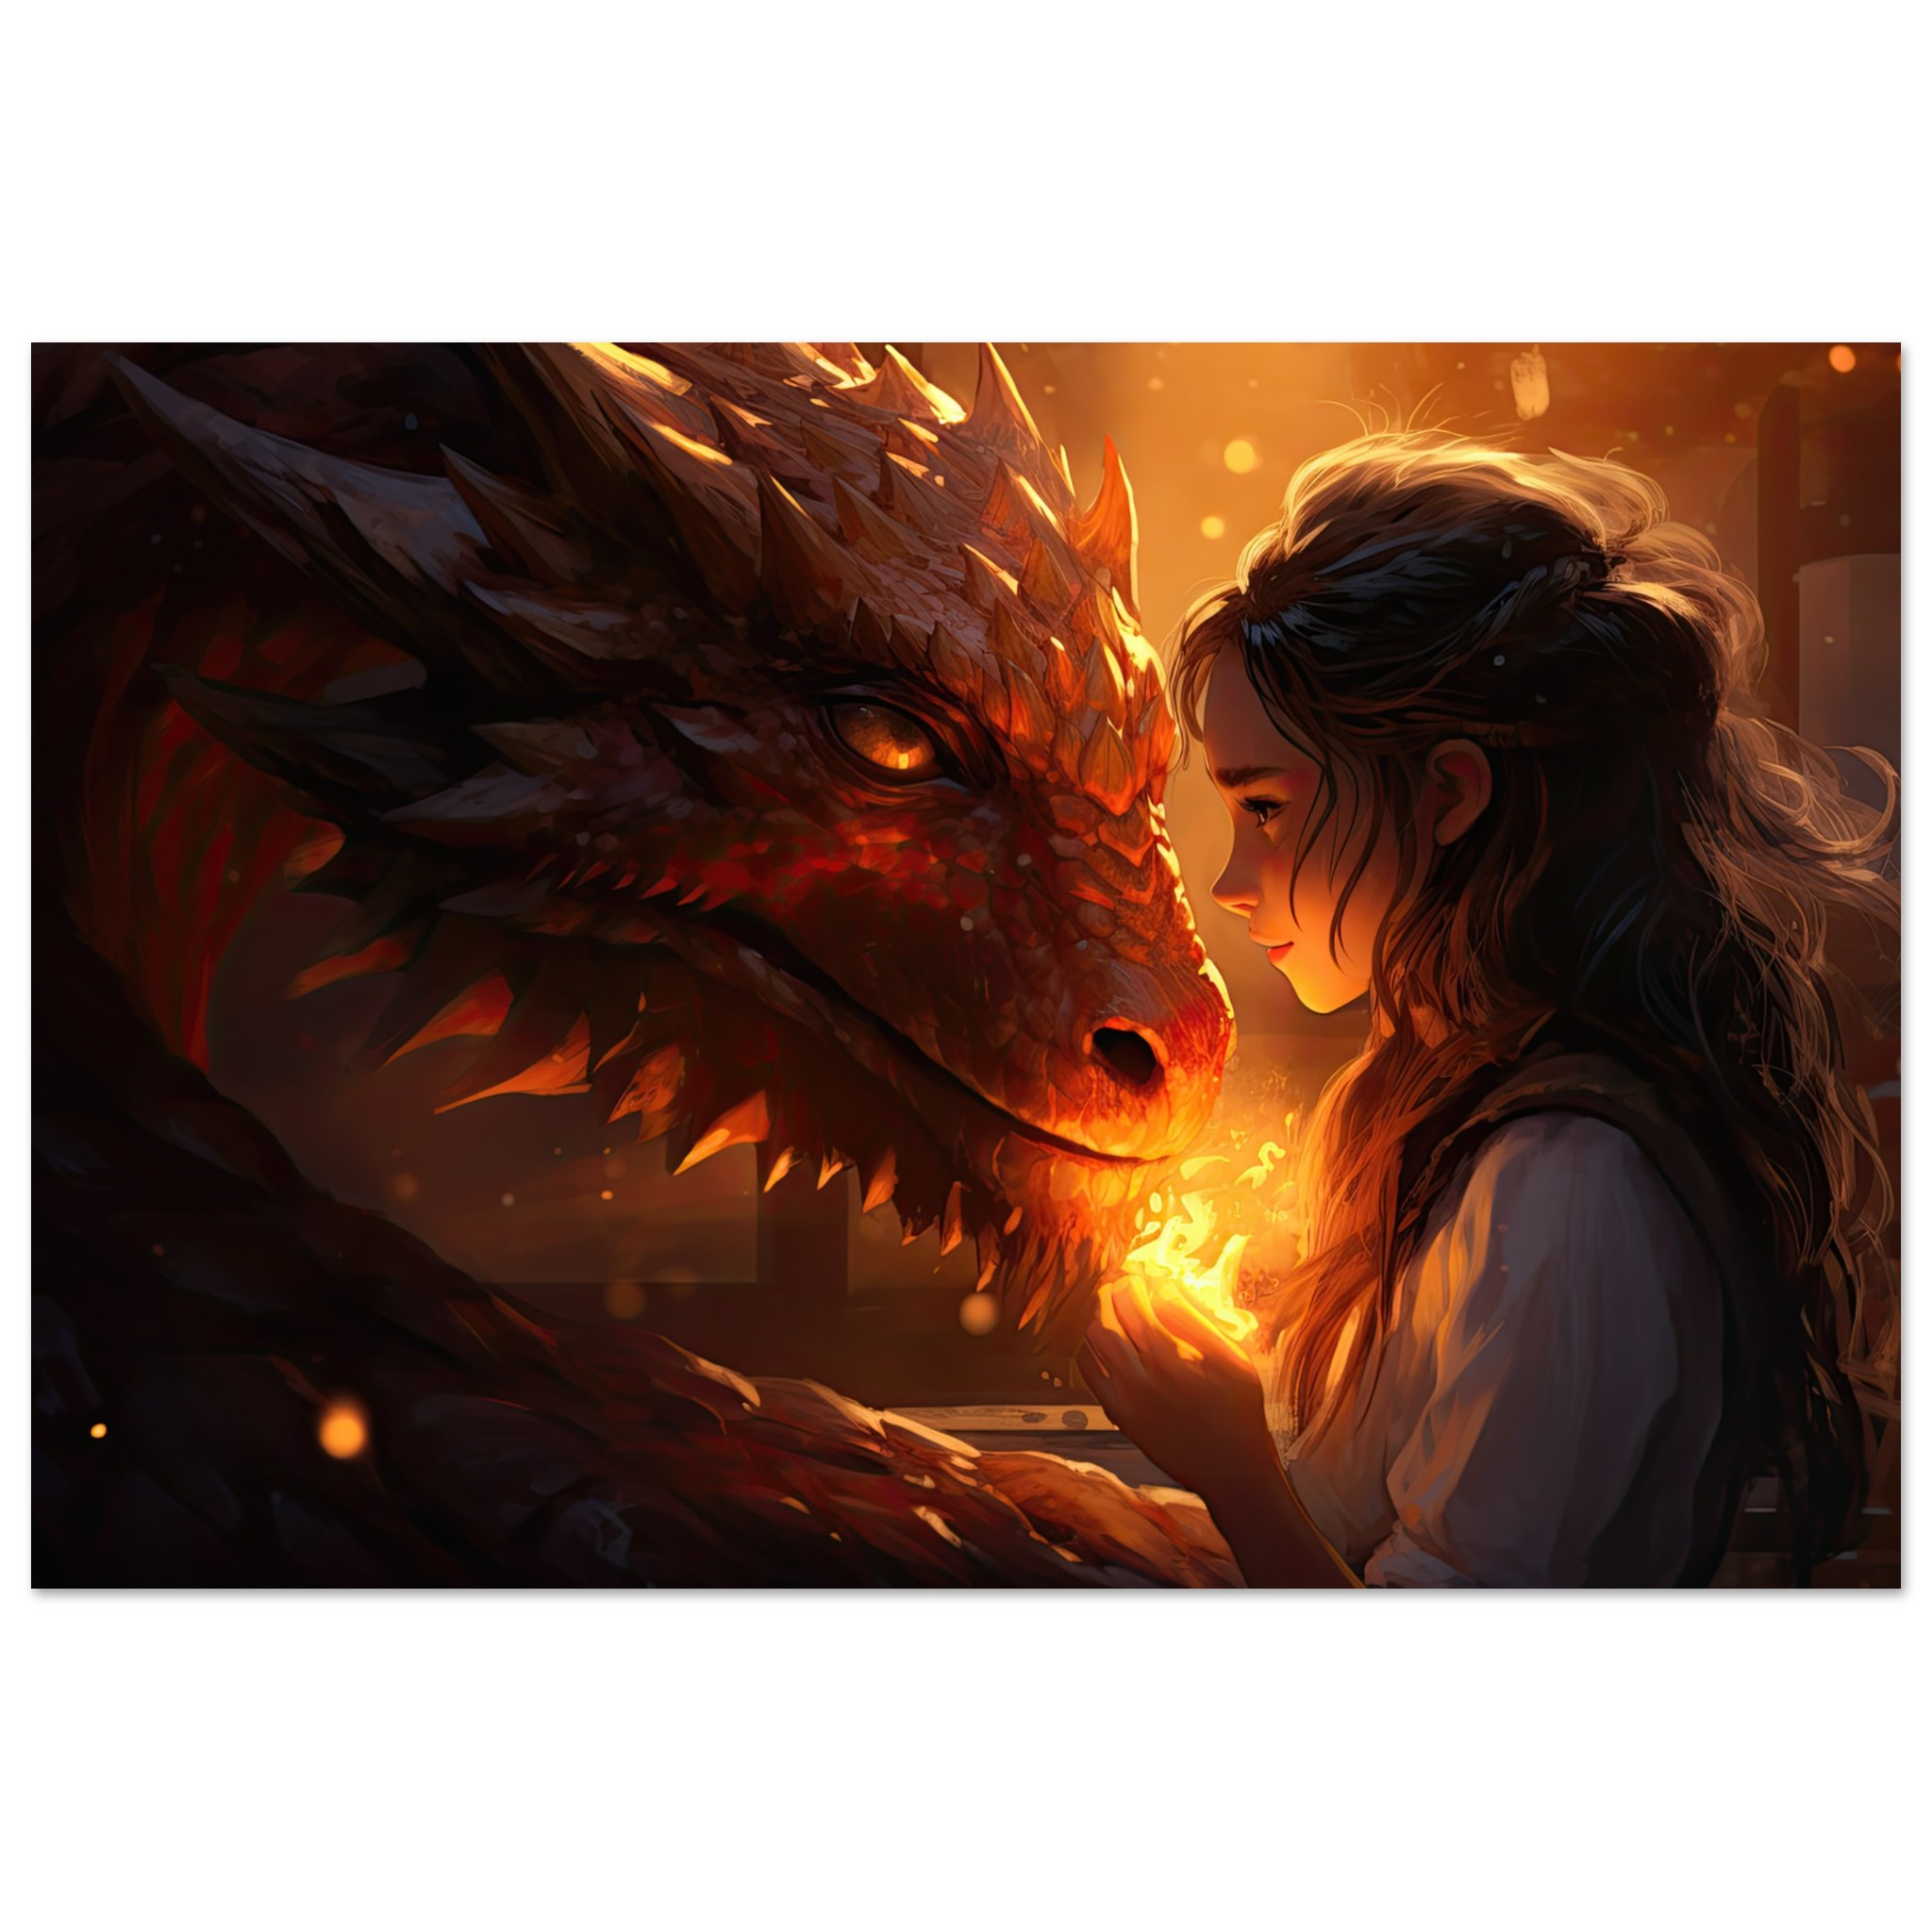 Magical Friendship - Girl and Dragon - Metal Print